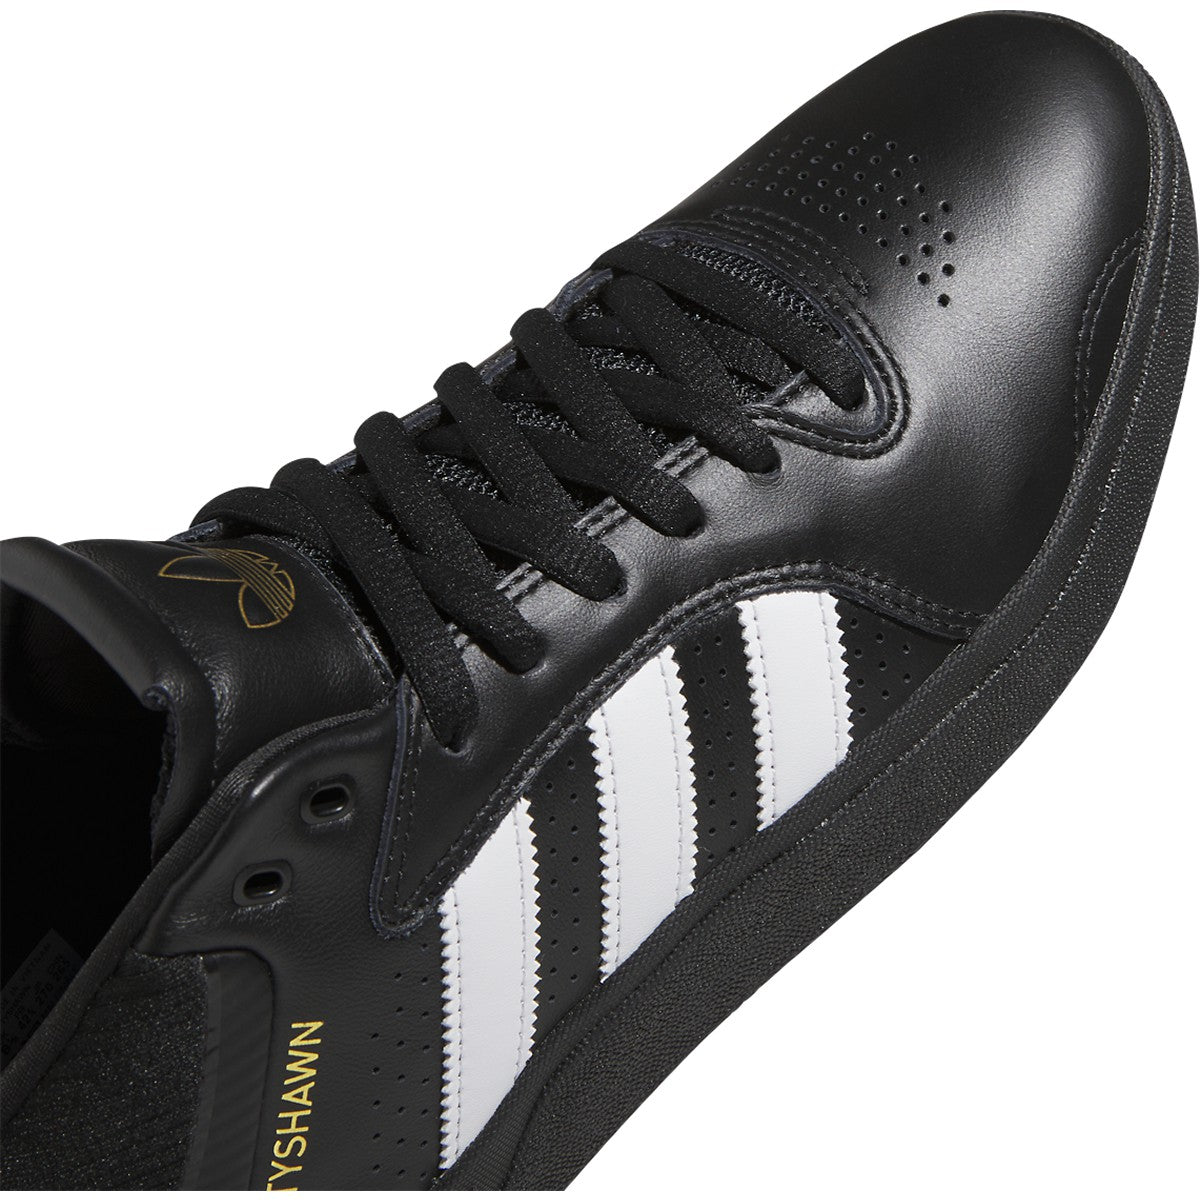 Core Black Tyshawn Adidas Skate Shoe Detail